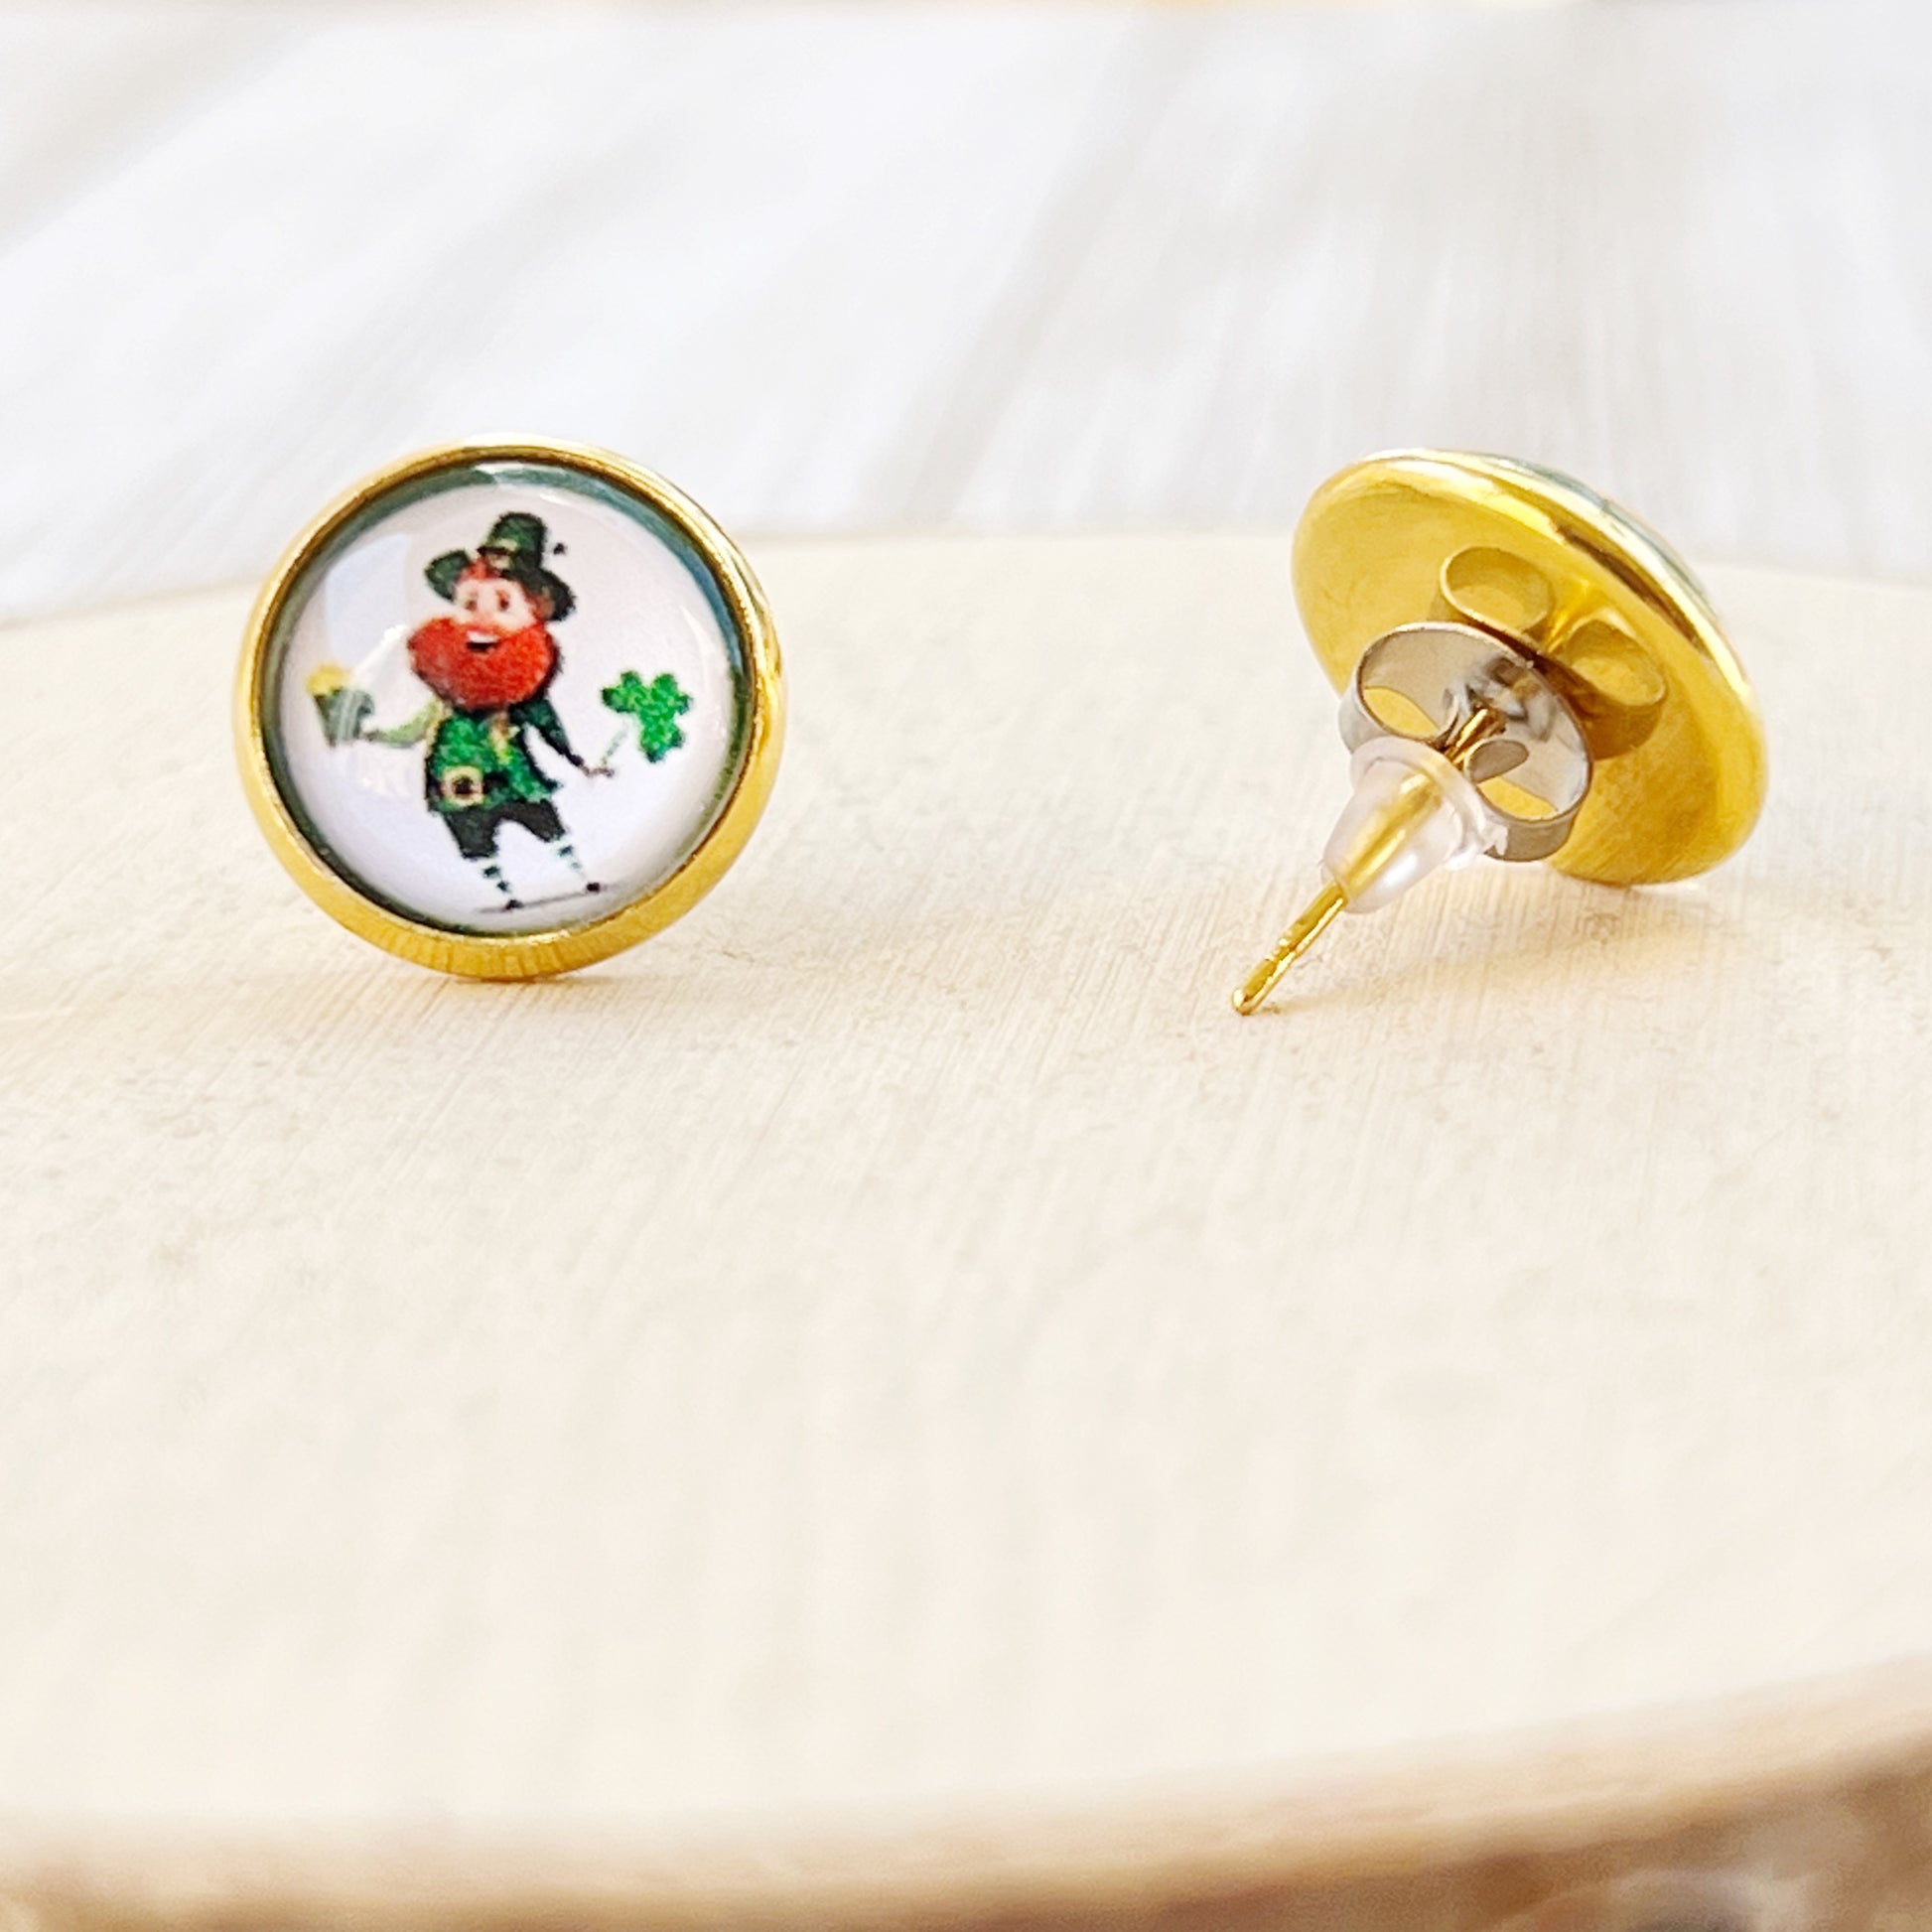 Leprechaun Gold Stud Earrings - Lucky & Festive Accessories